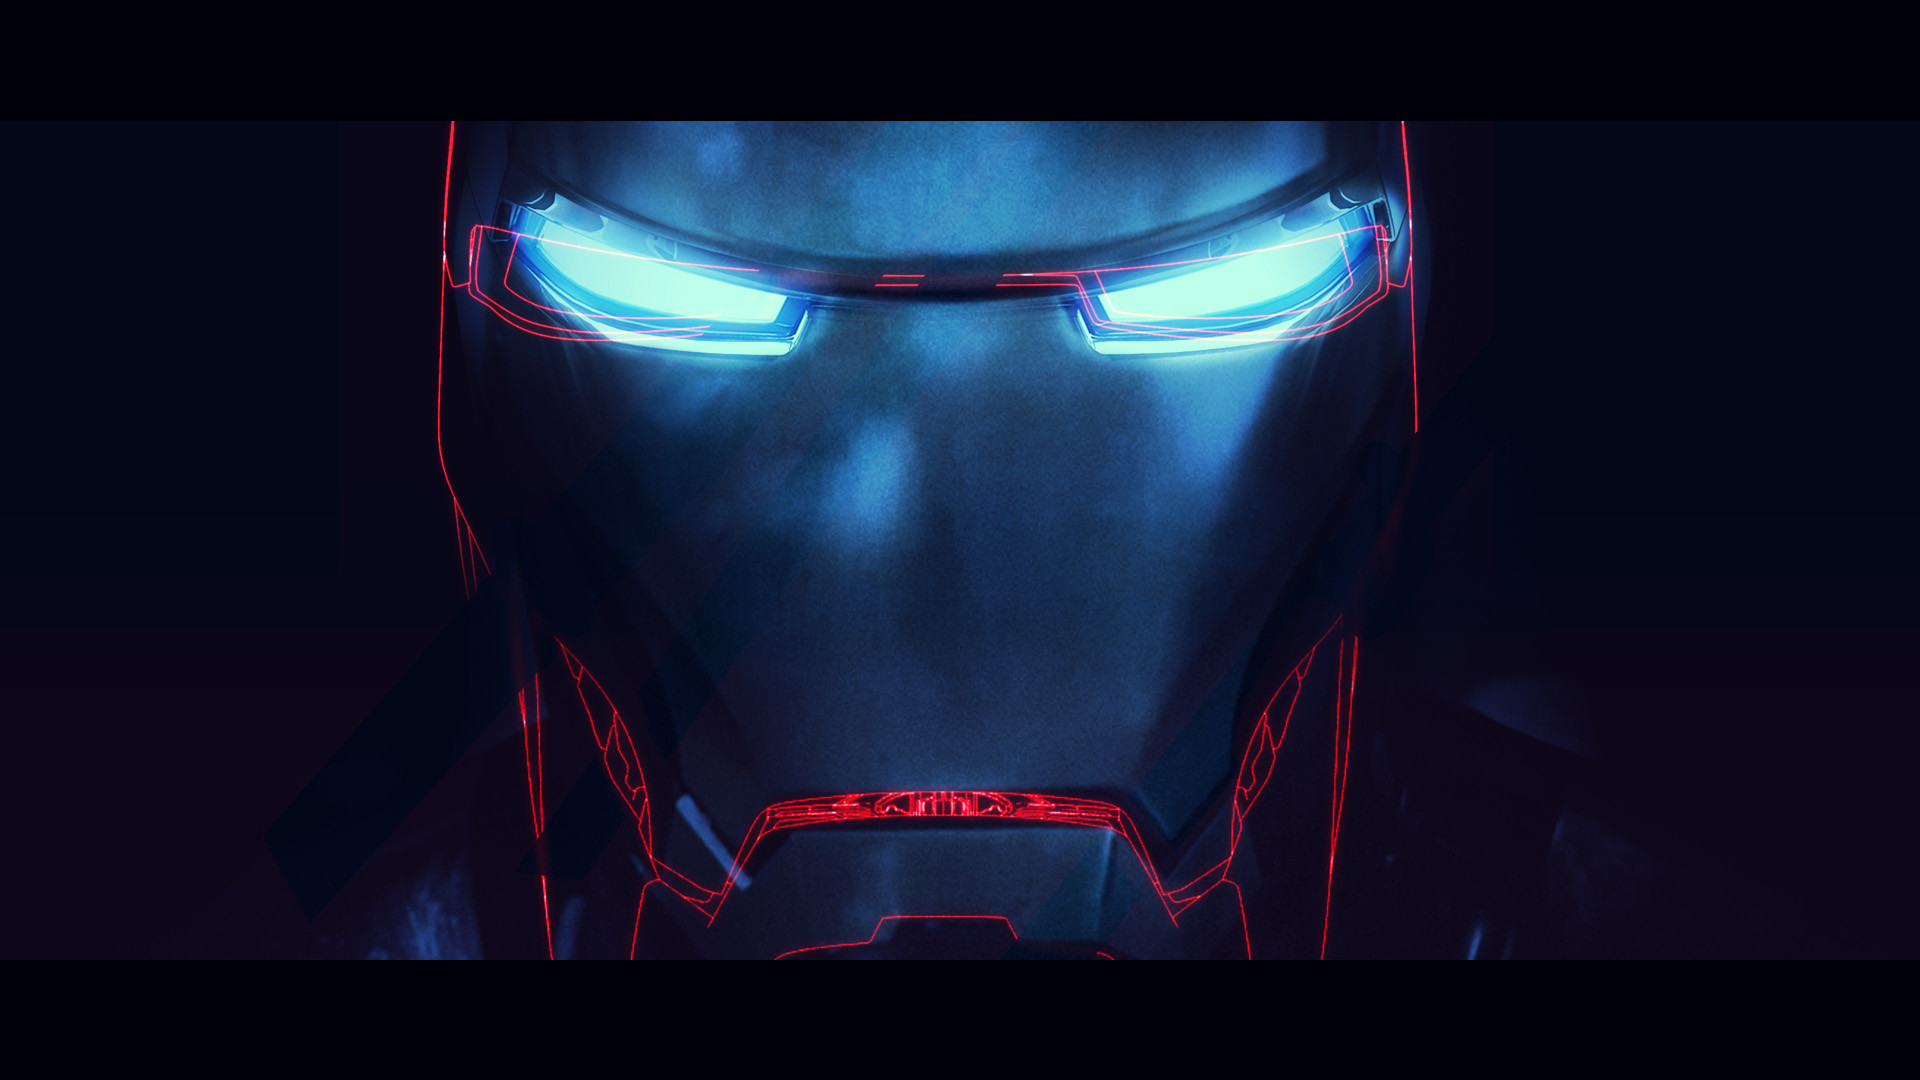 Iron Man 3 Computer Wallpapers, Desktop Backgrounds | | ID .